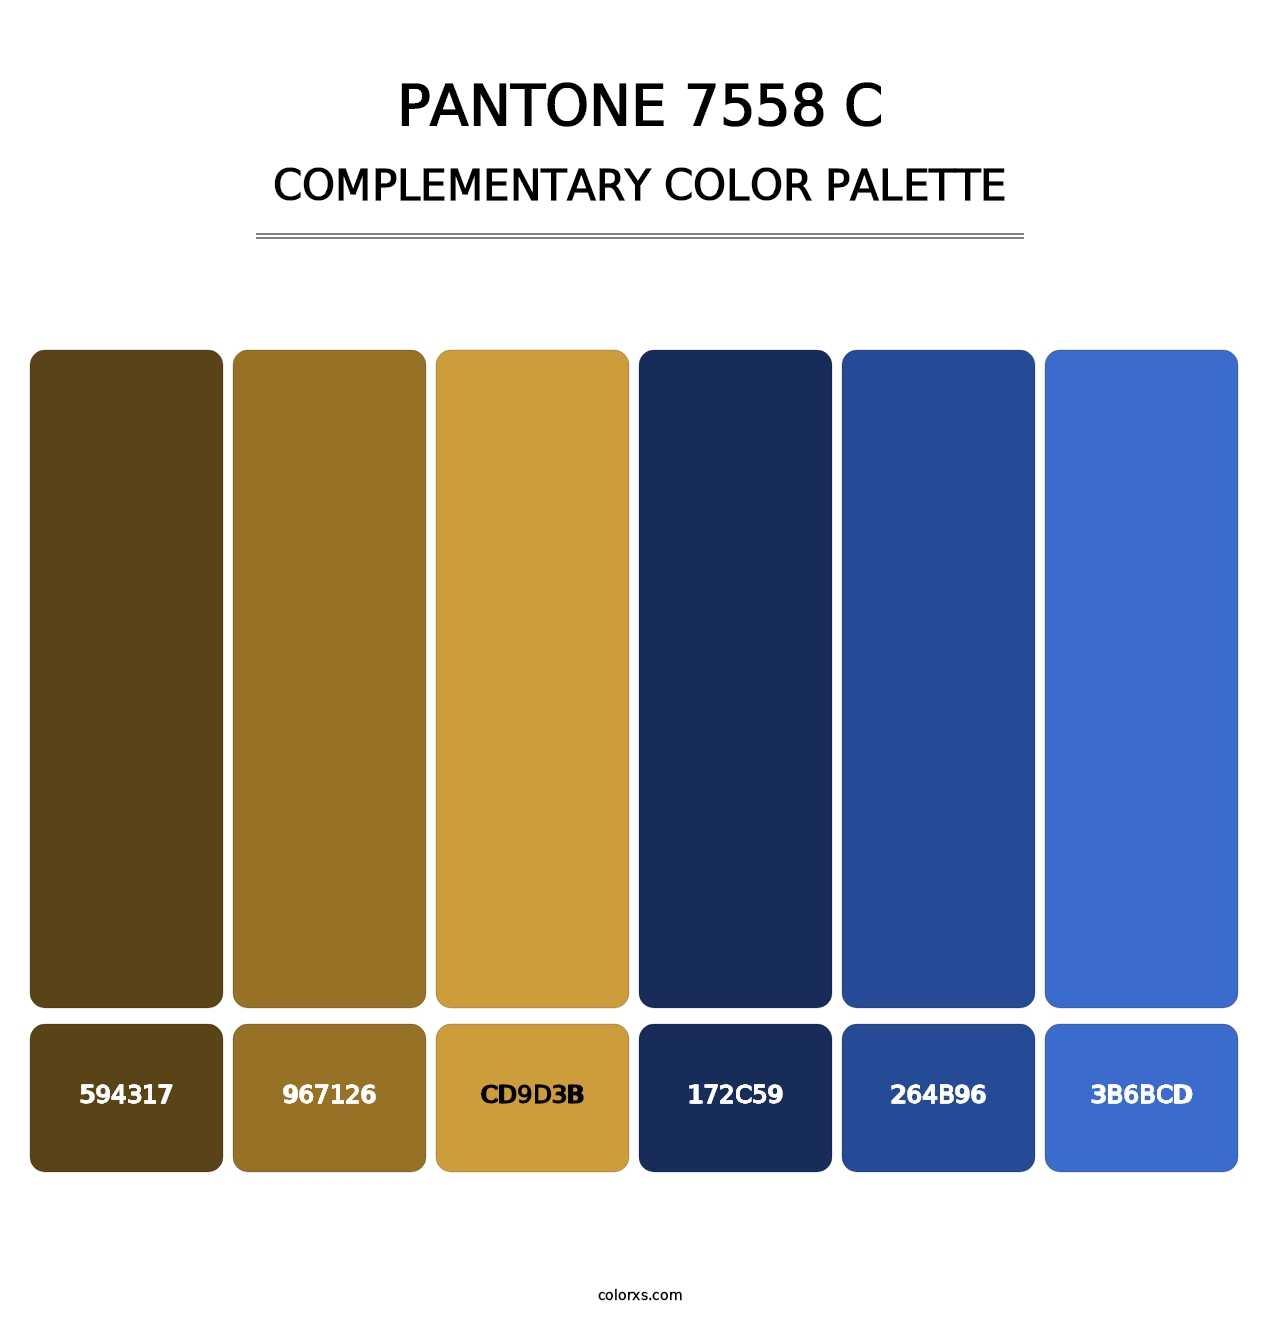 PANTONE 7558 C - Complementary Color Palette